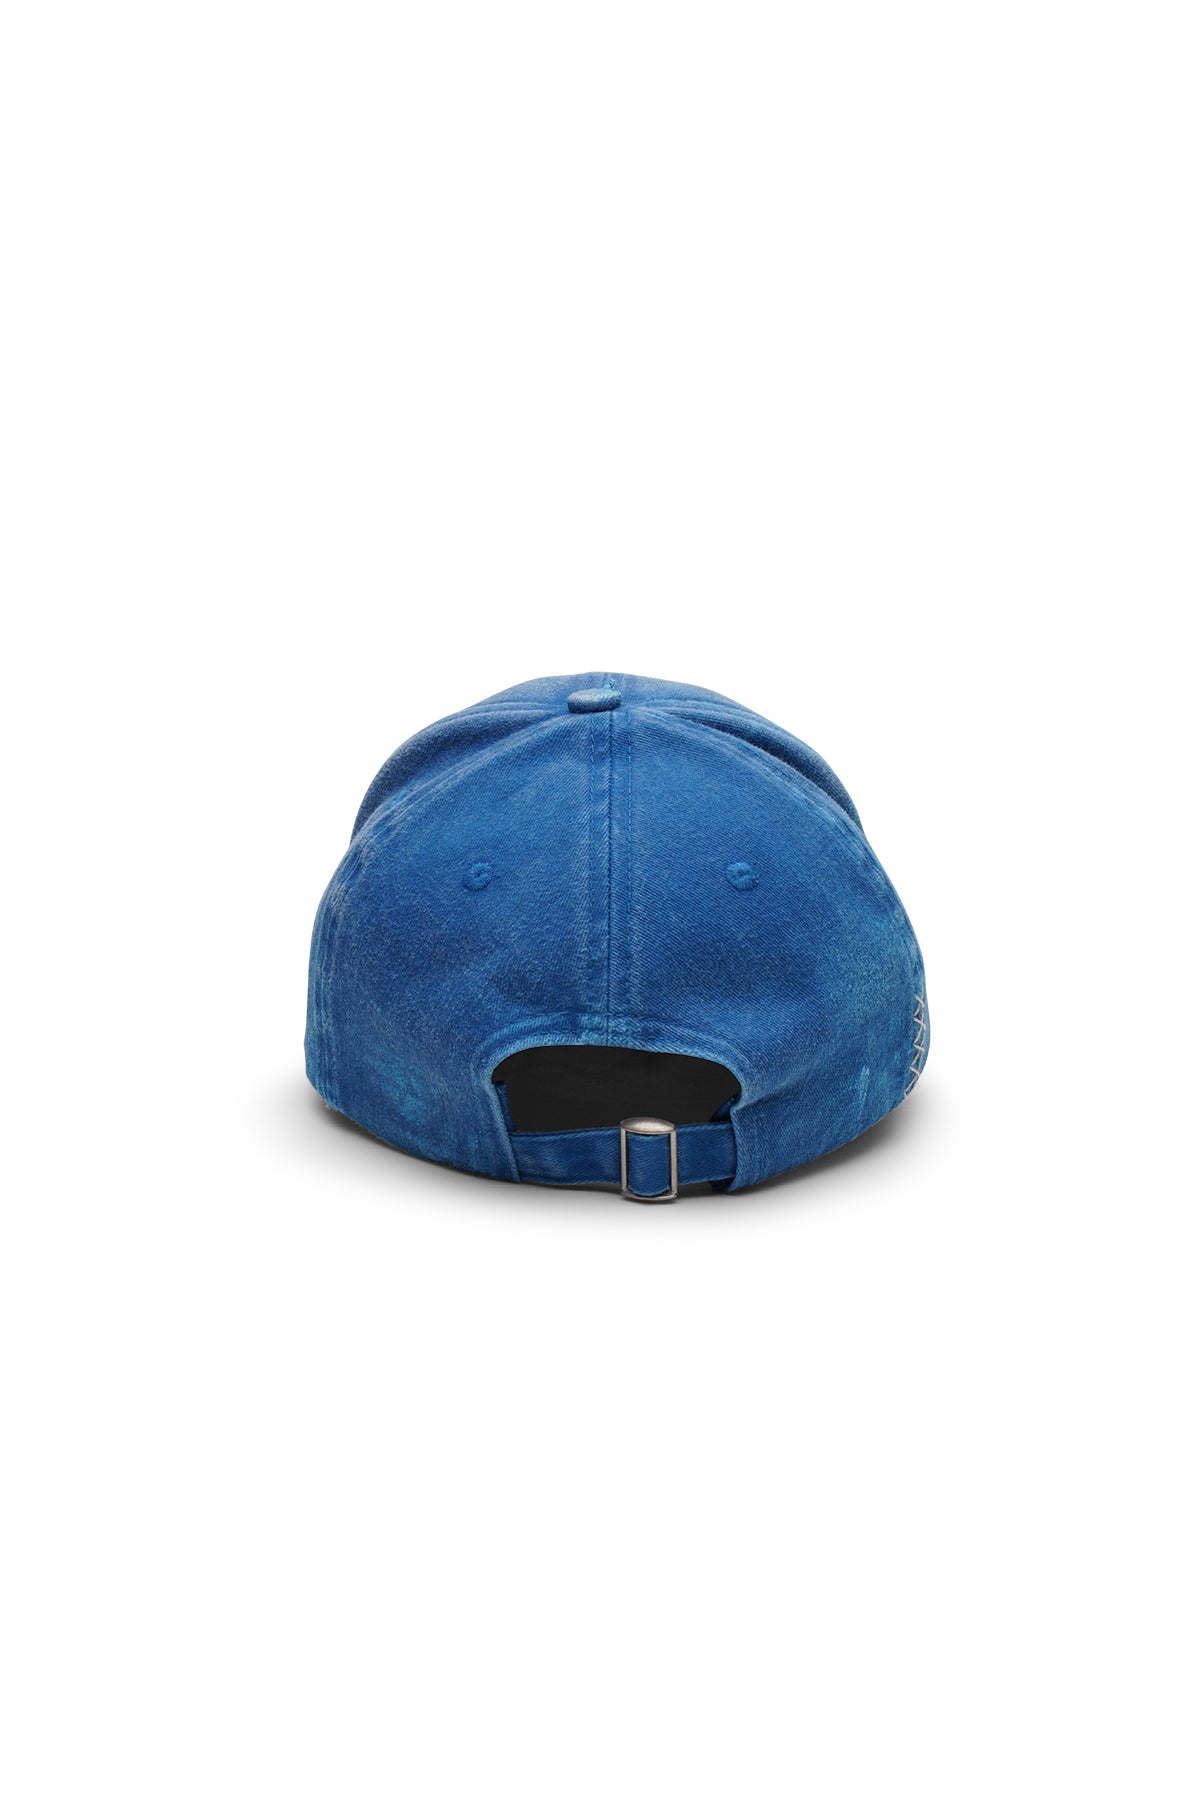 Blue denim vintage washed cotton cap by SoonNoon